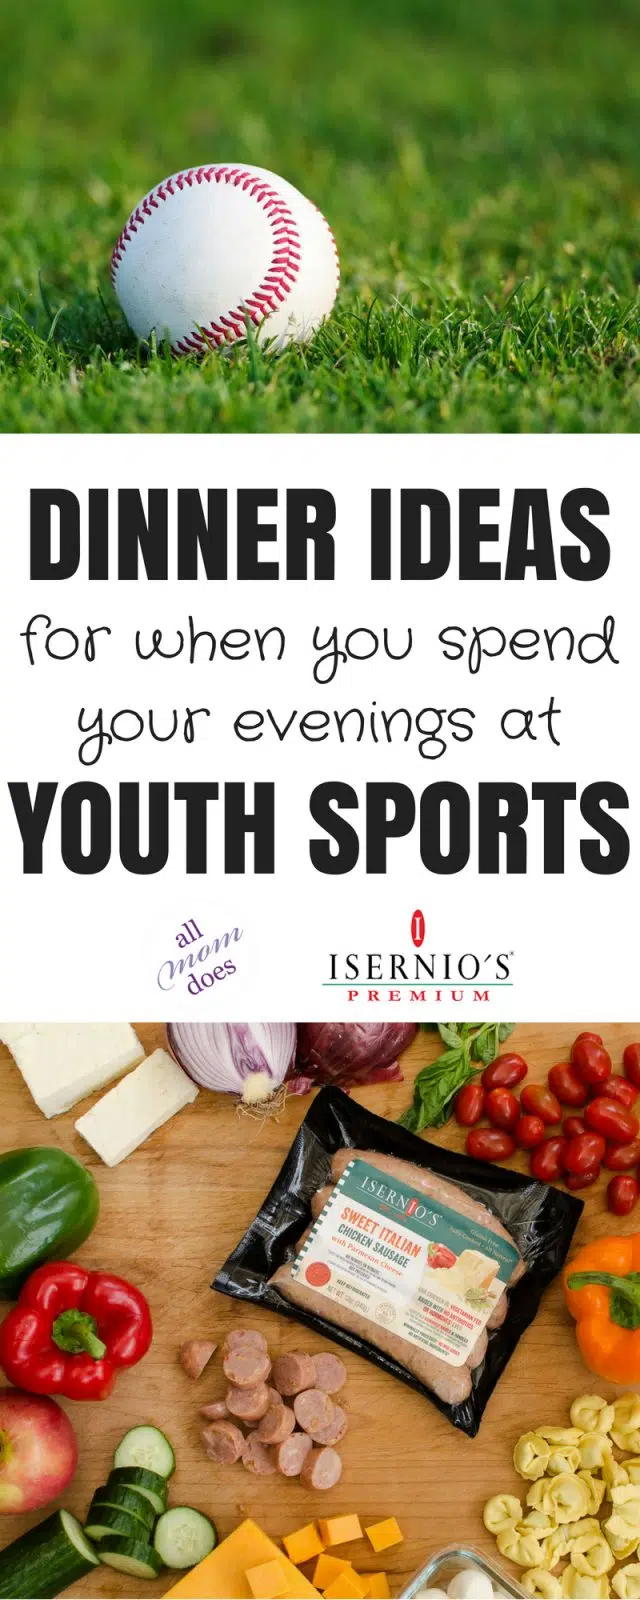 Dinner ideas for youth sports. #picnic #baseball #littleleague